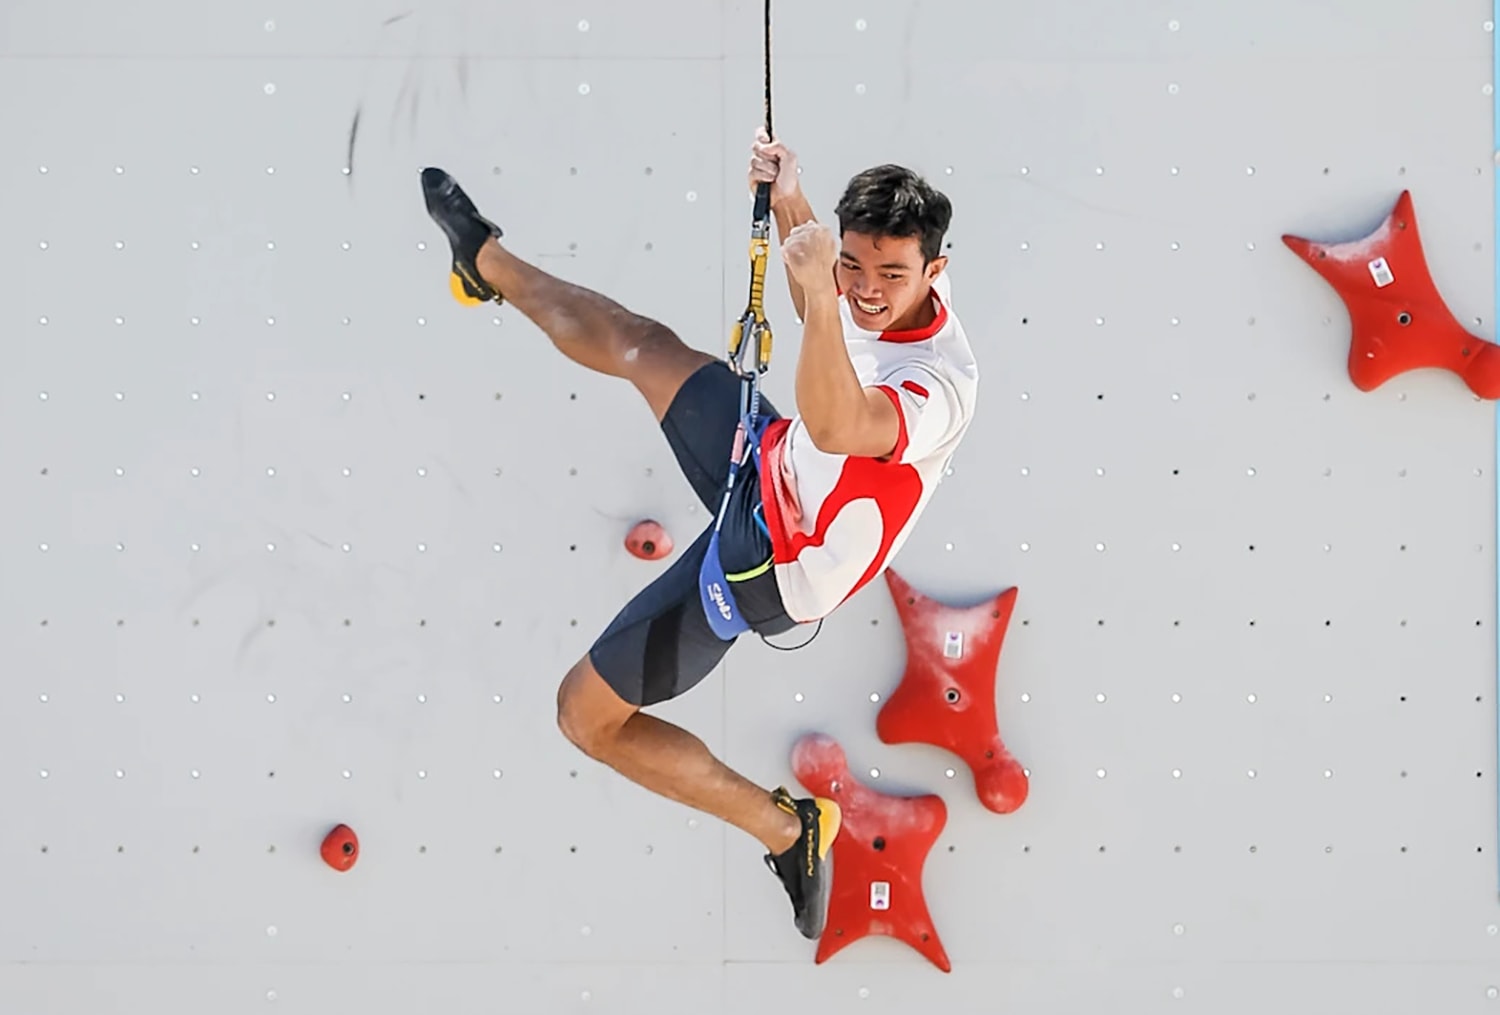 Mens sport climbing final at the olympics